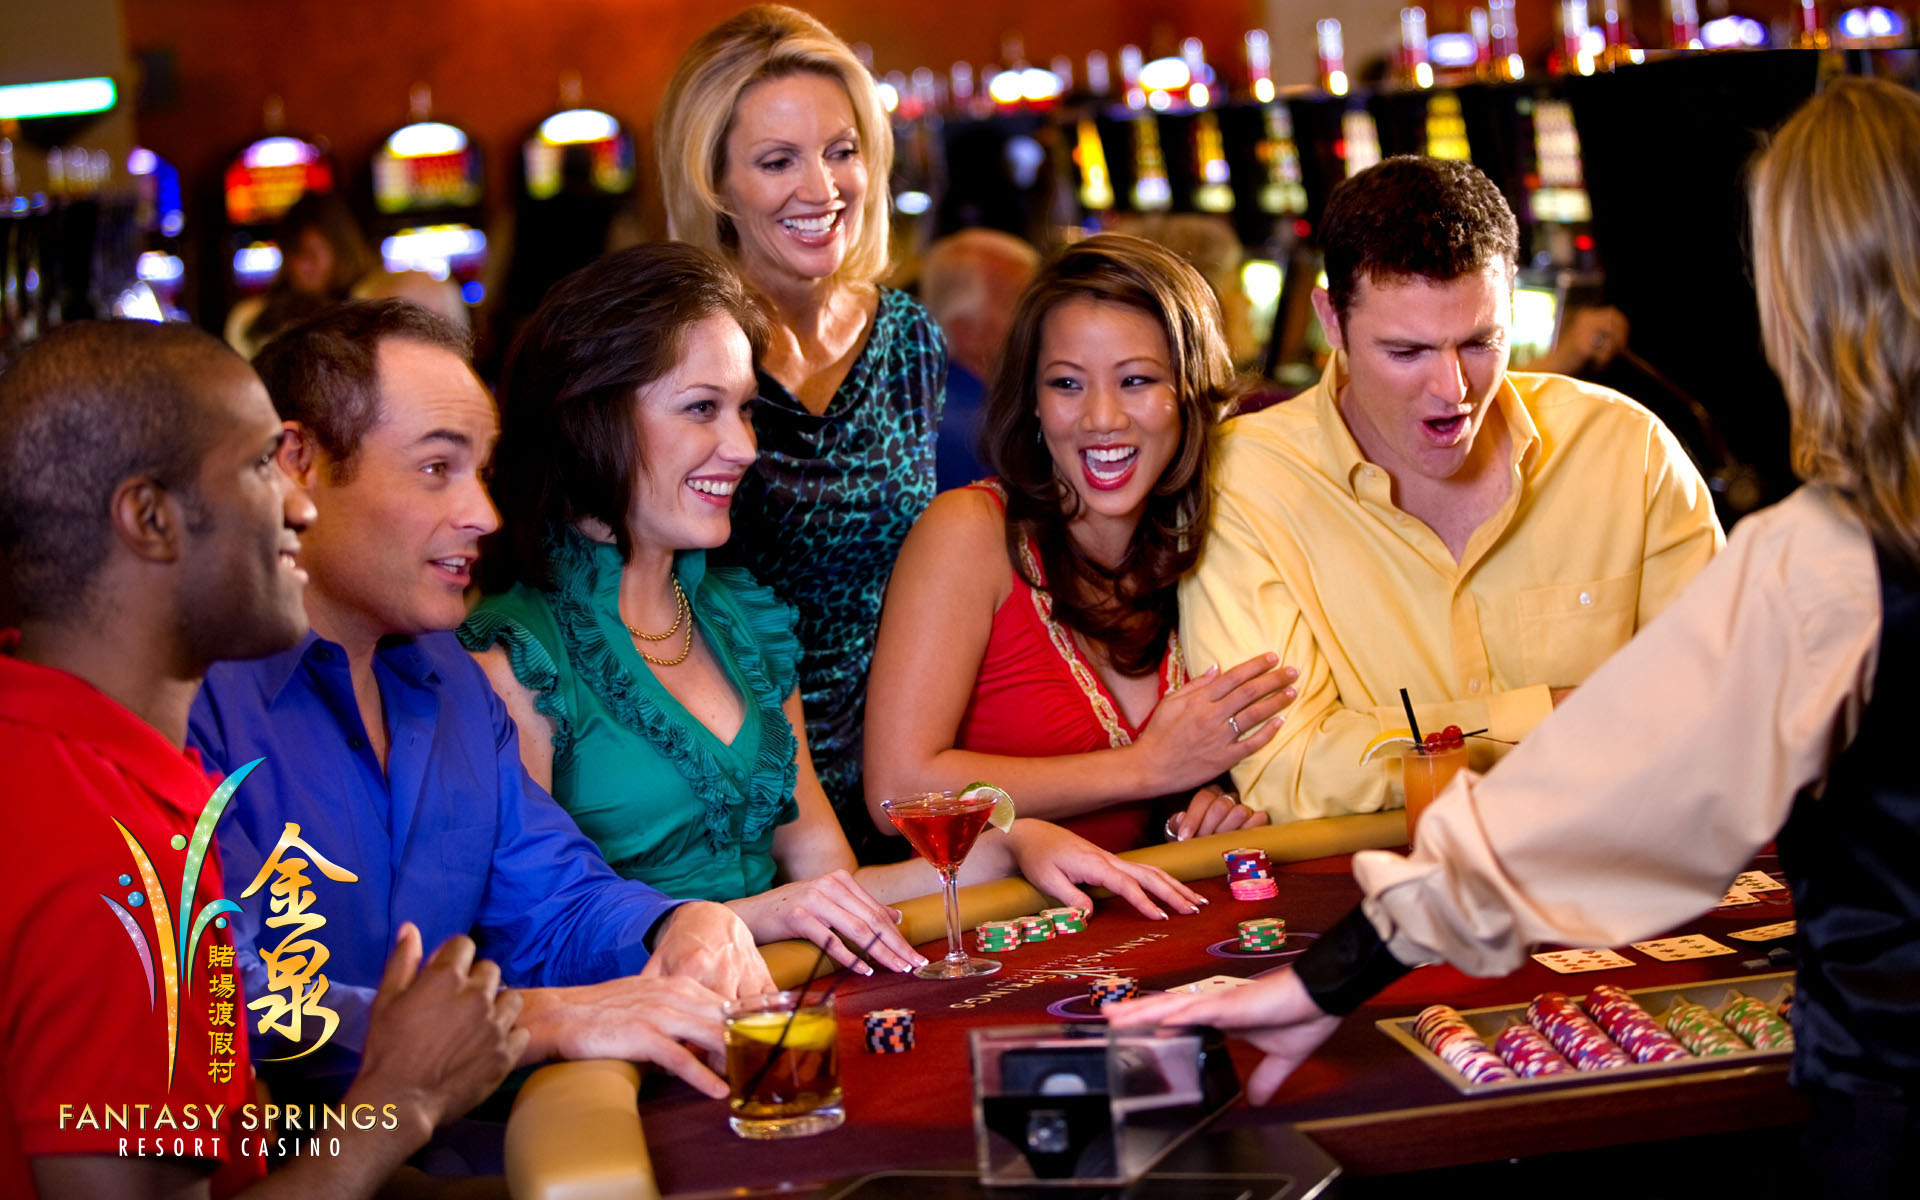 fantasy springs resort casino promo code